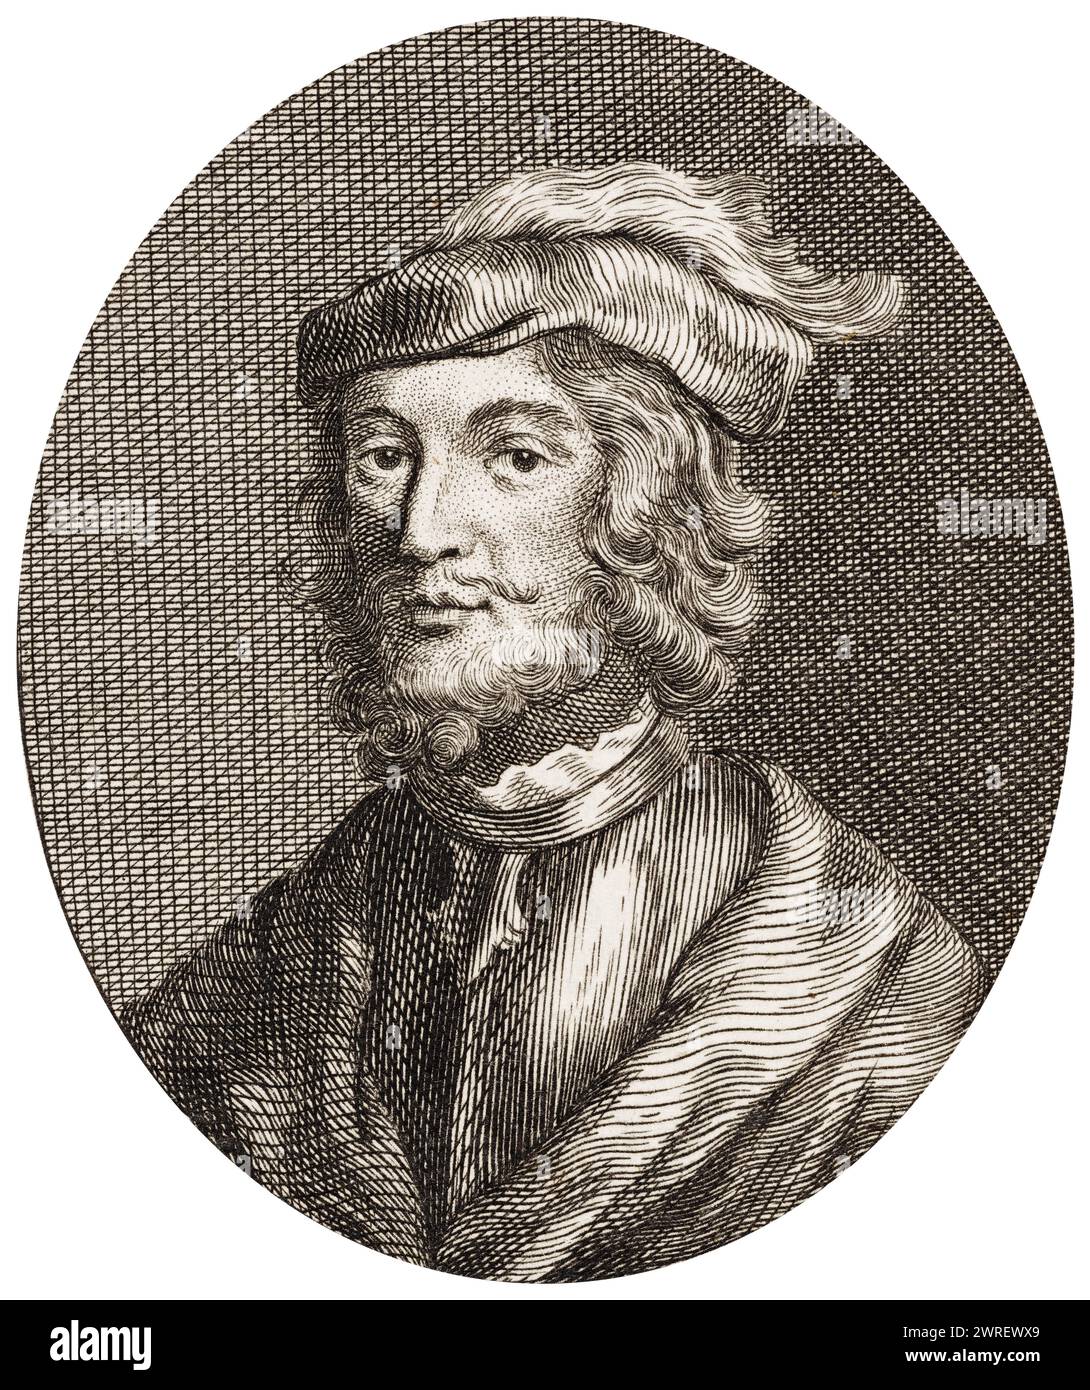 David II of Scotland (1324-1371), King of Scotland 1329-1371, portrait engraving by Alexander Bannerman, 1750-1780 Stock Photo